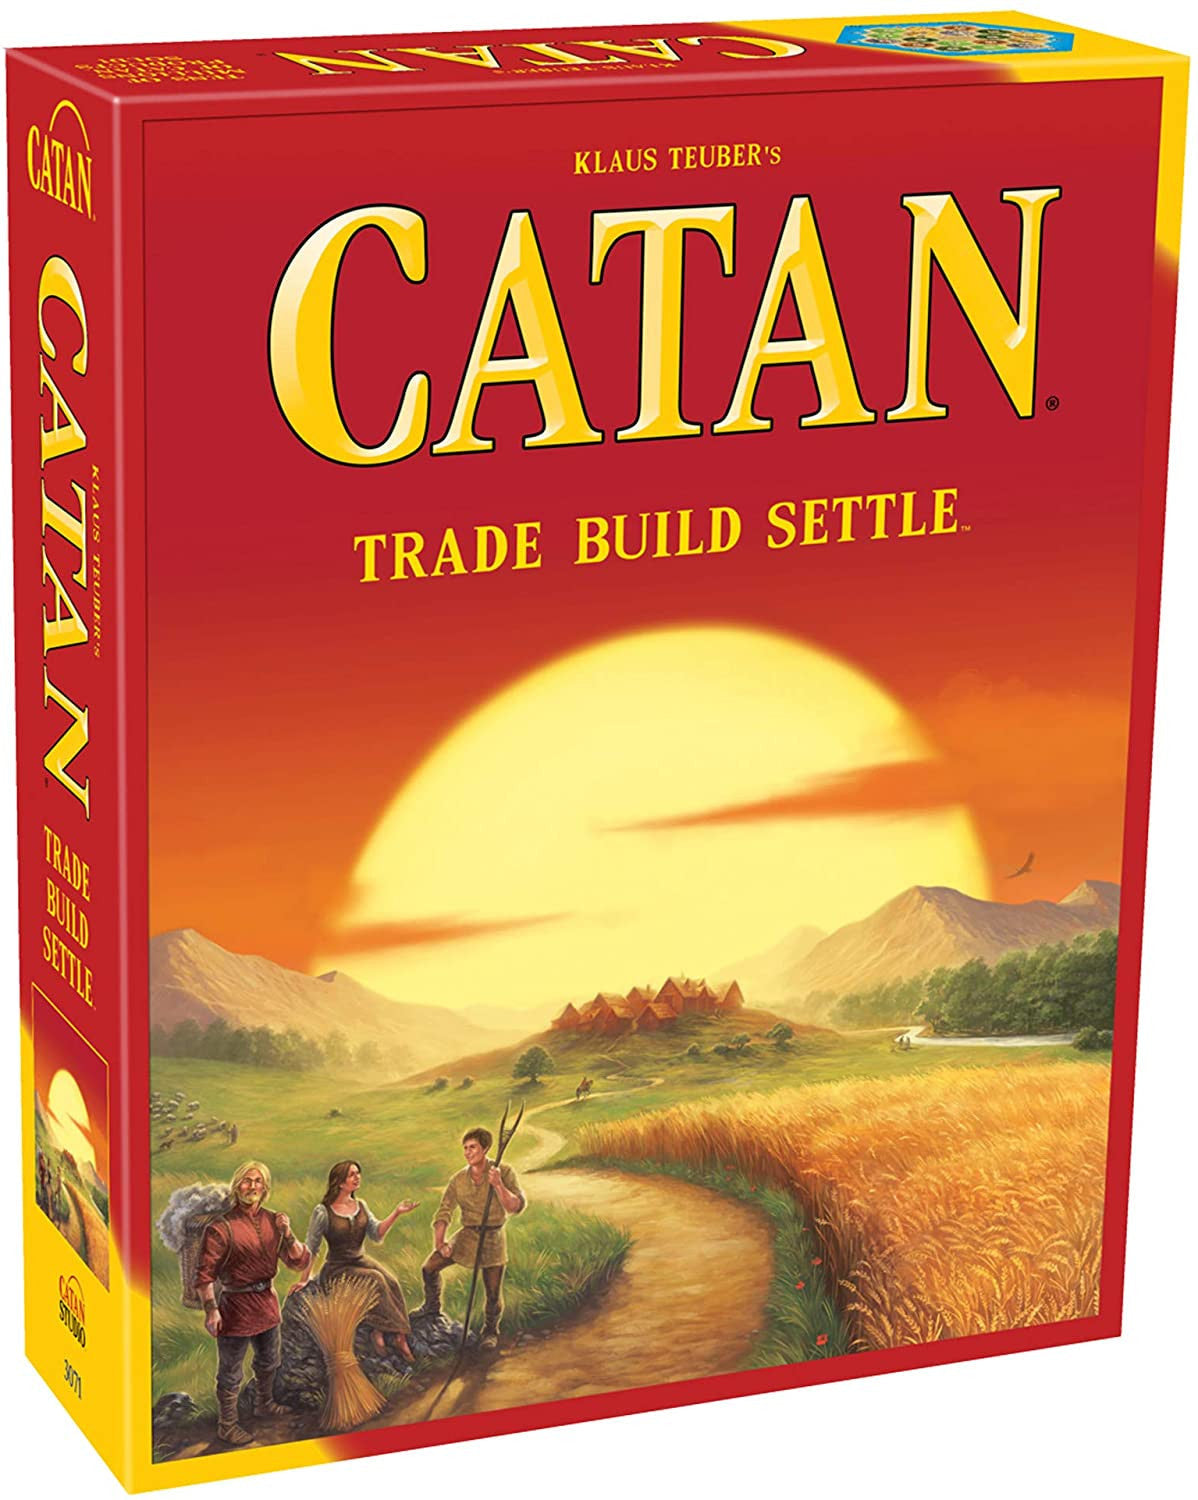 Catan - Base Game (5th Edition)